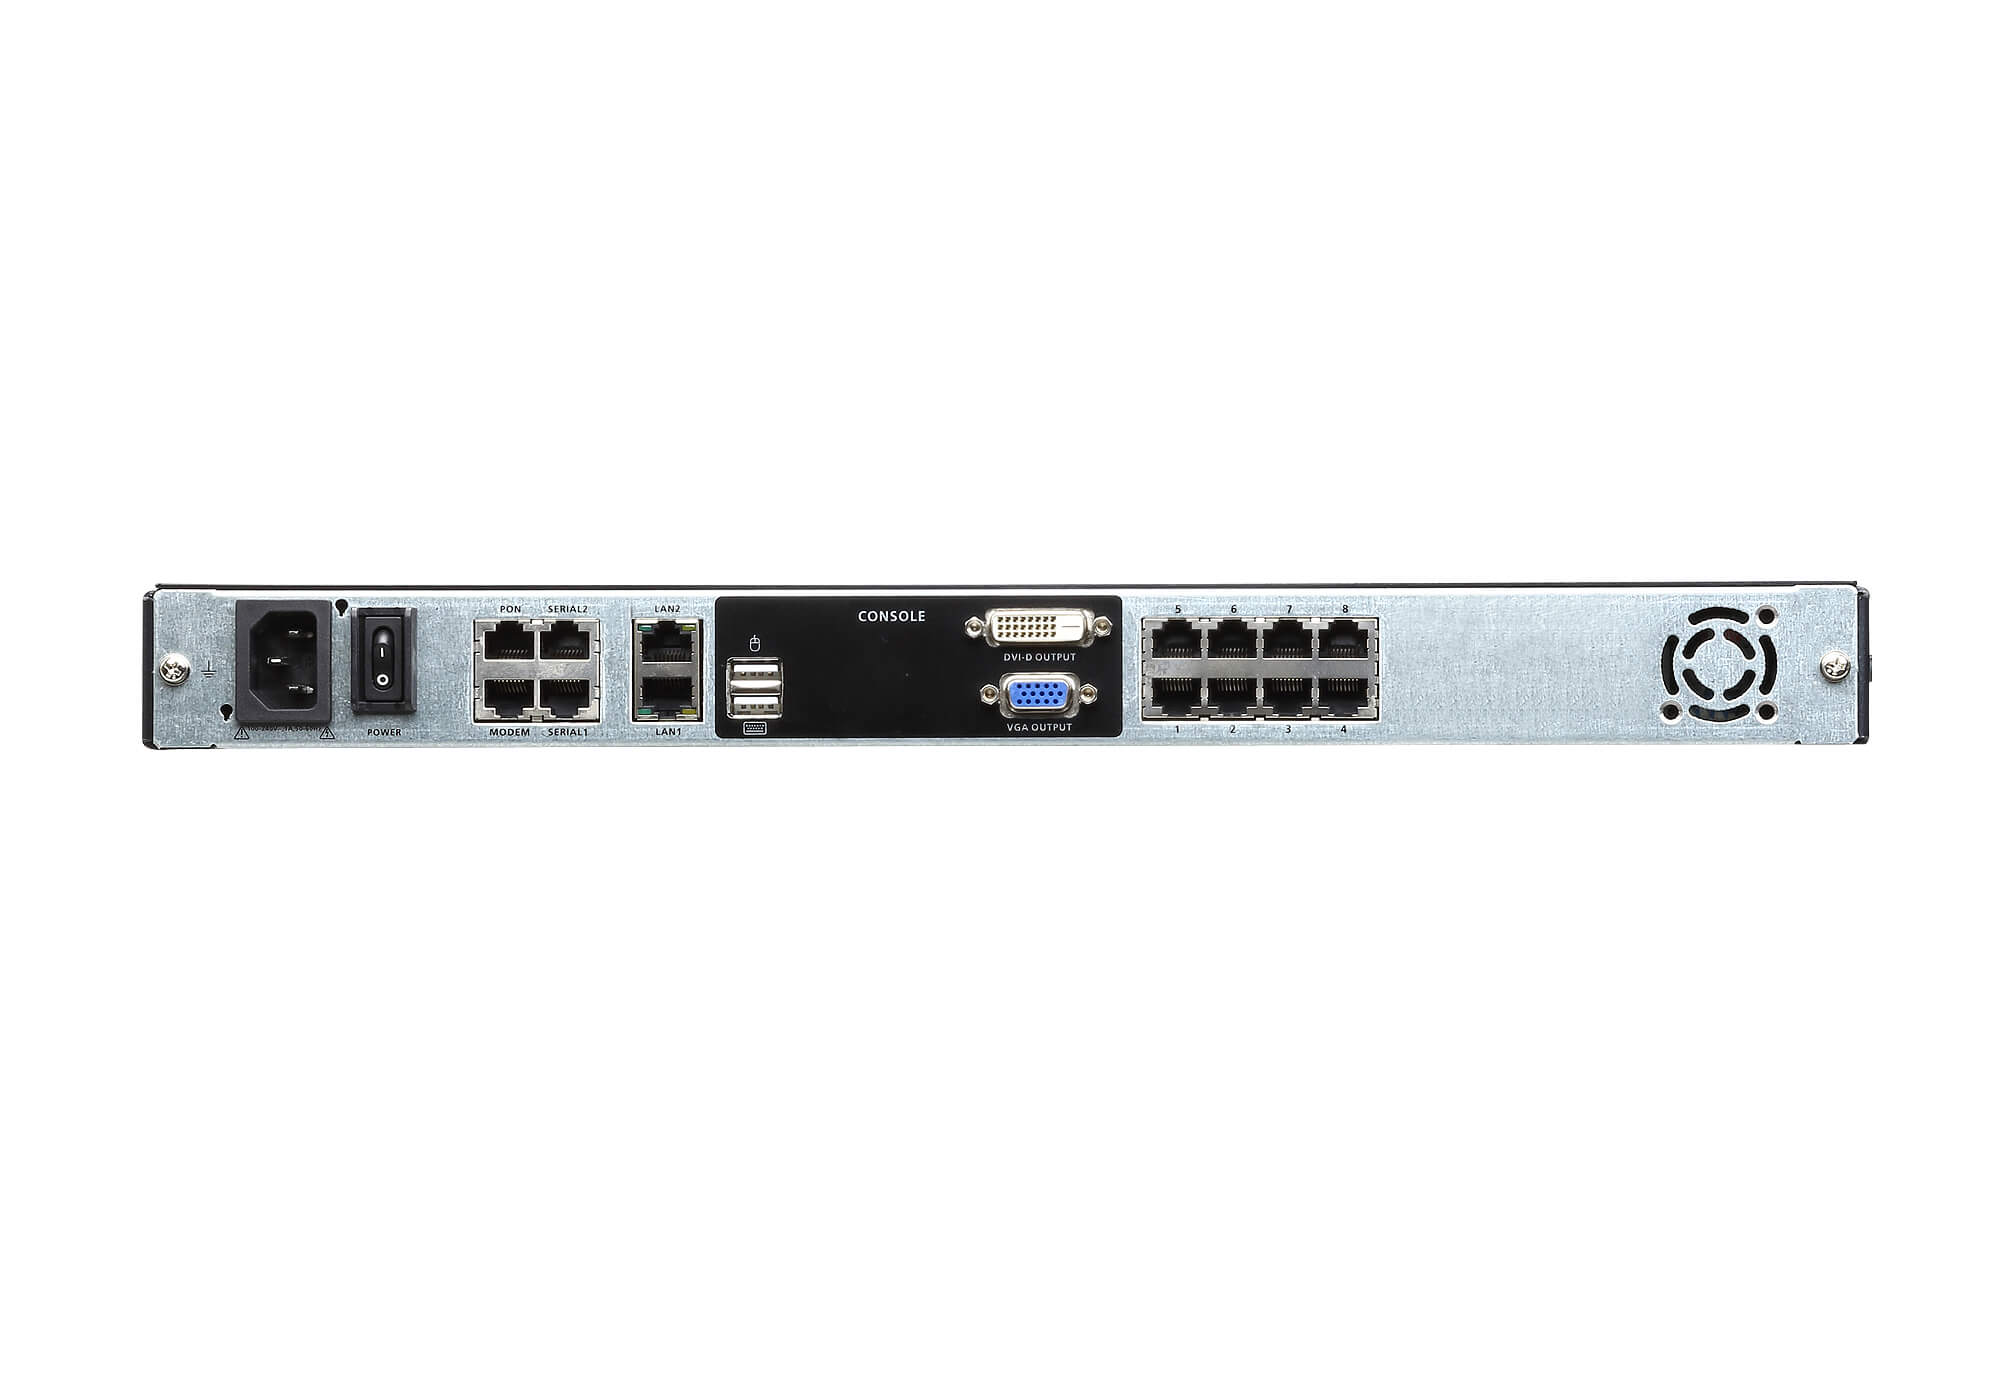 KL1108V - 1-Local/1-Remote Access 8-Port Multi-Interface Cat 5 Dual